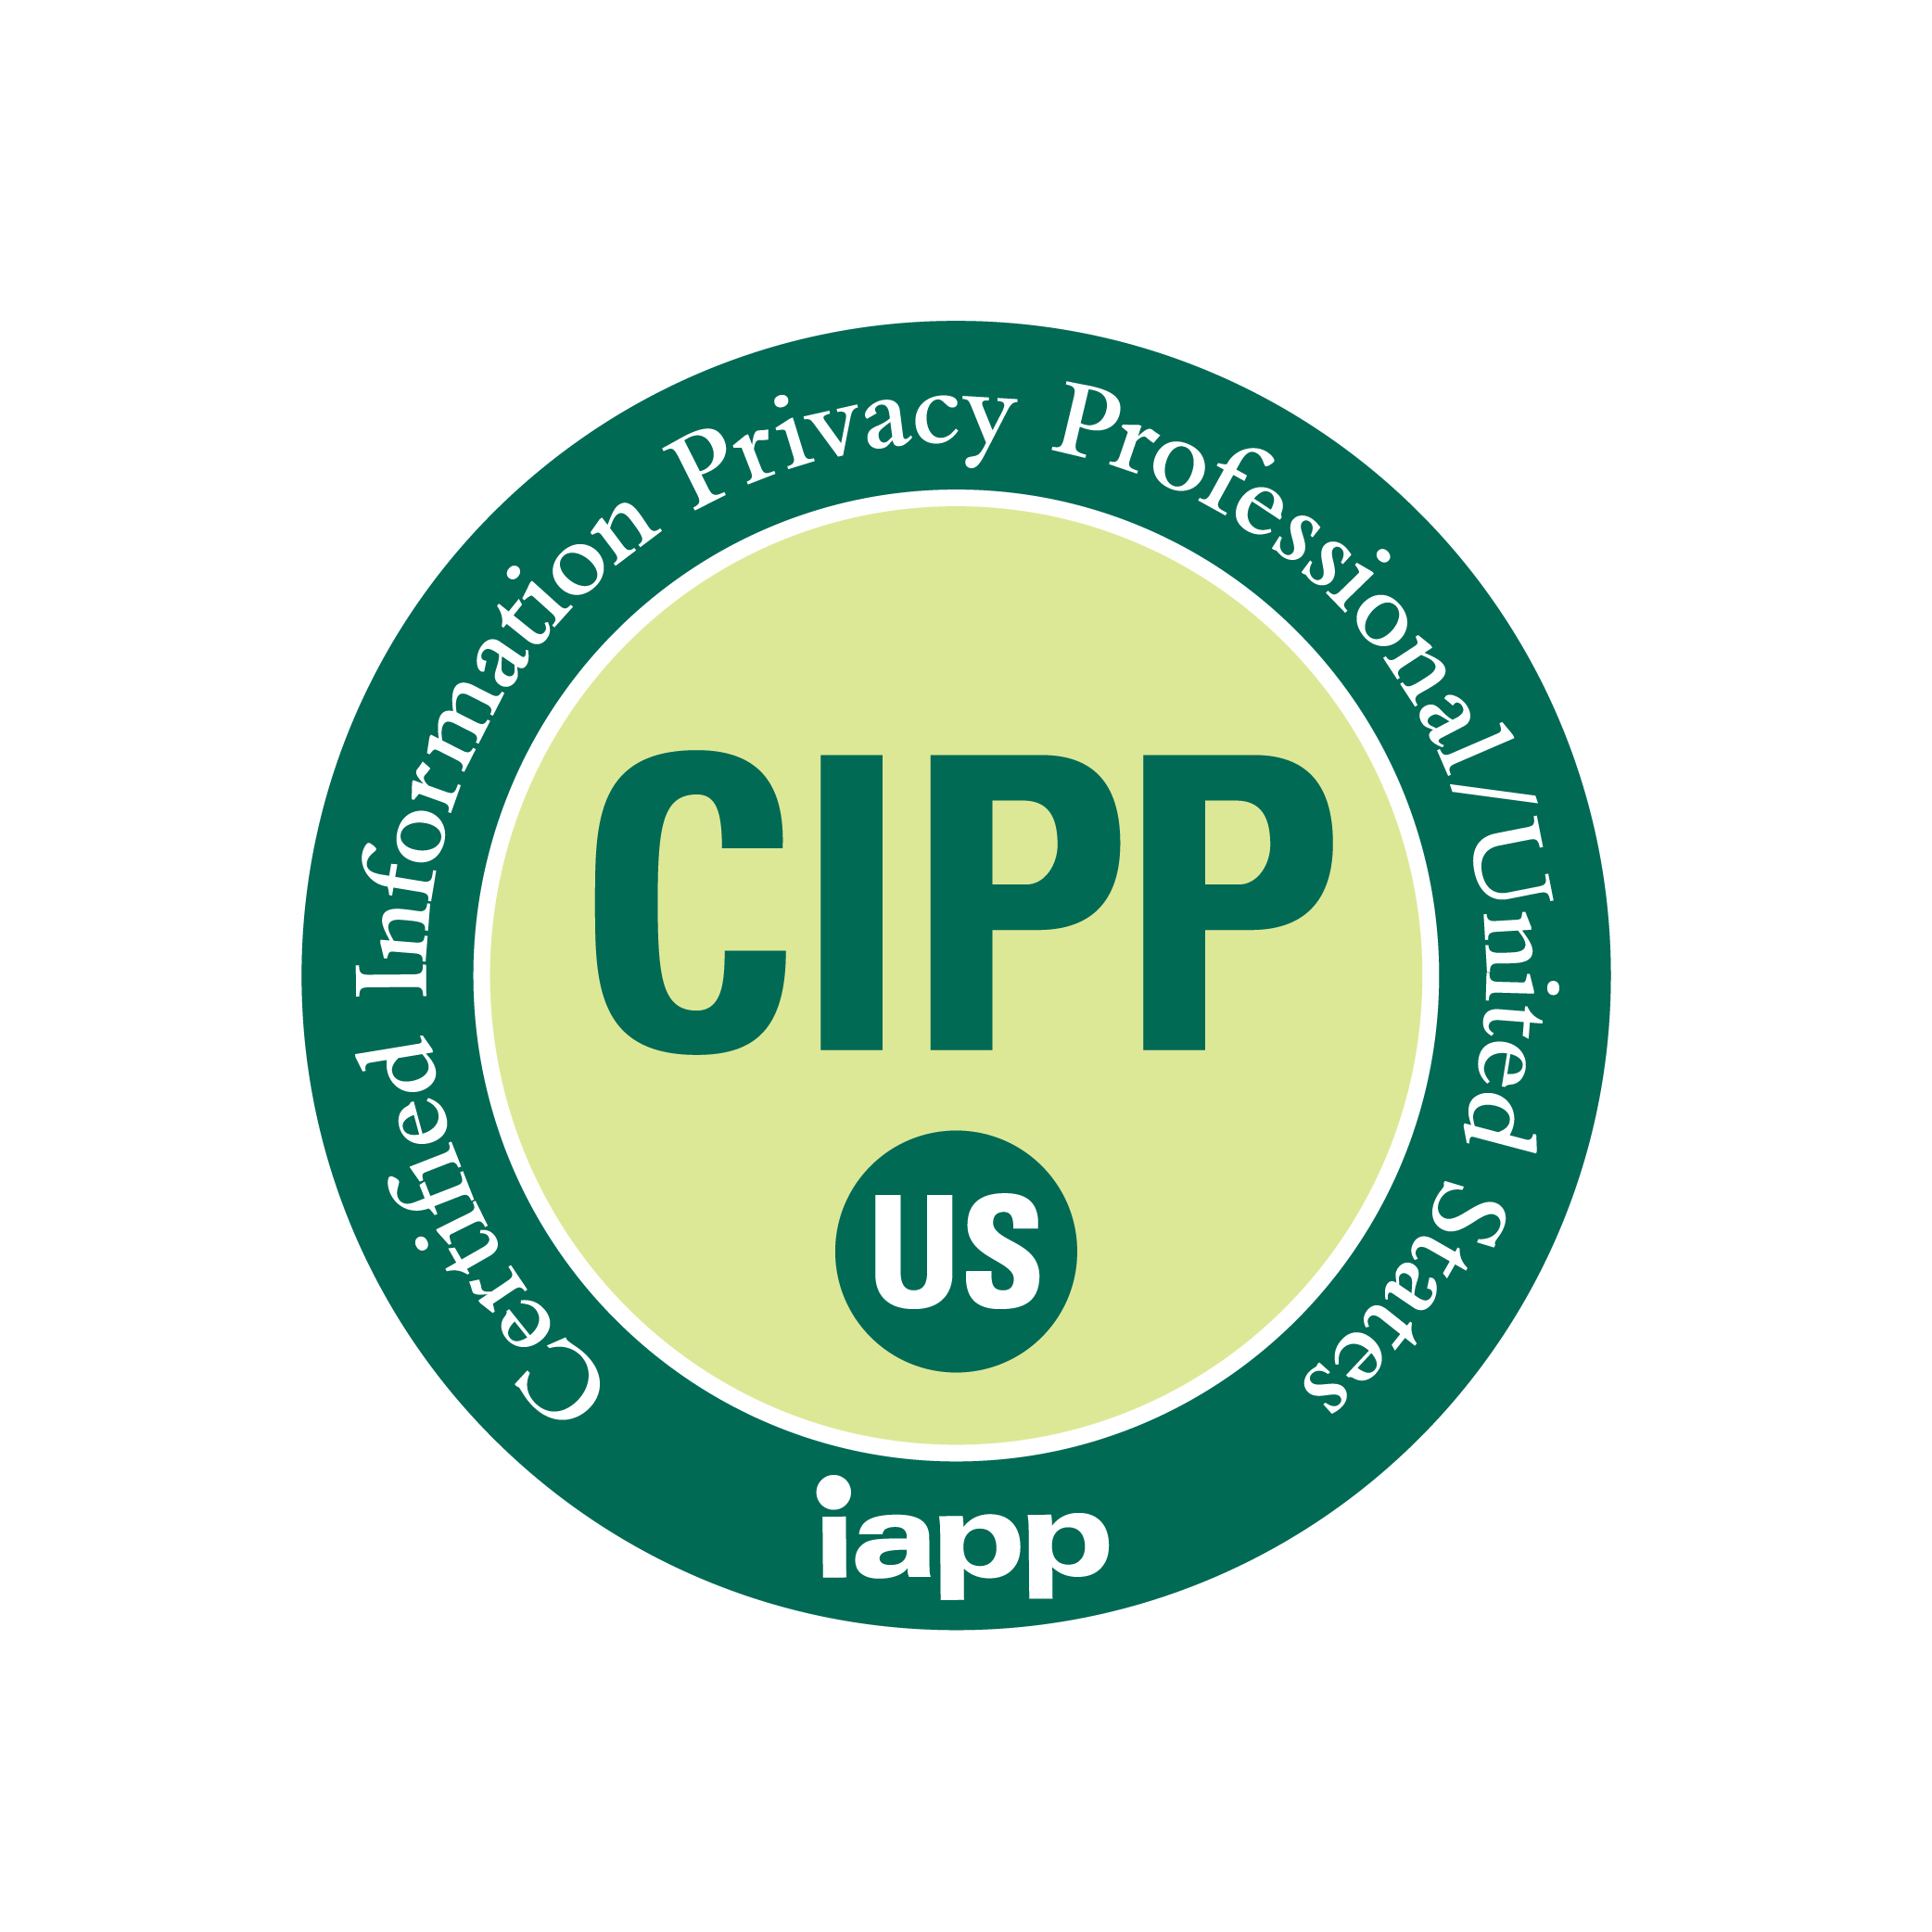 CIPP/US